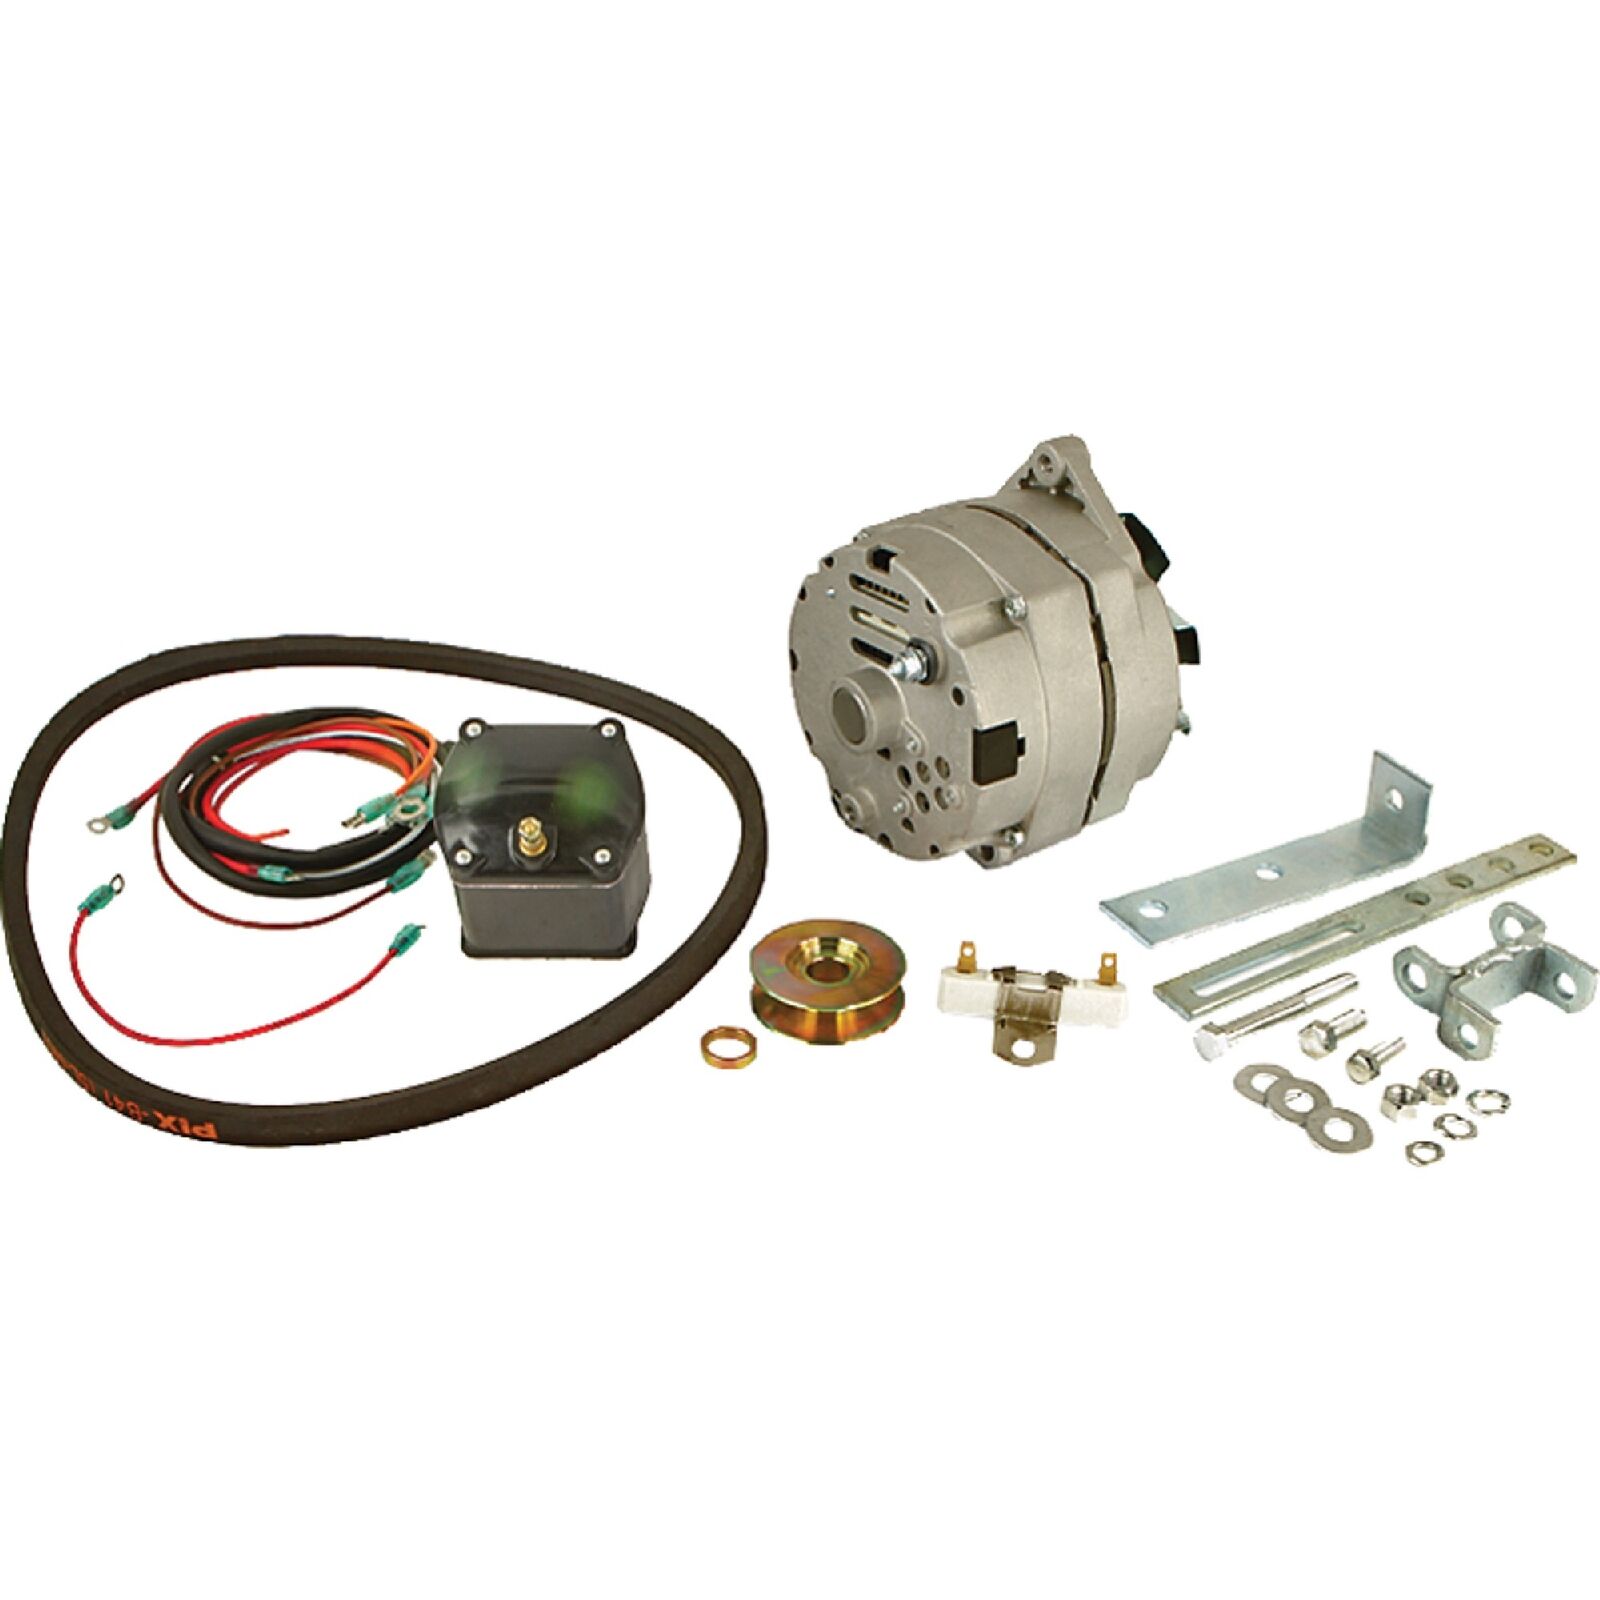 Generator to Alternator Conversion Kit For Ford 2N 8N 9N Tractor 12V; 400-14142